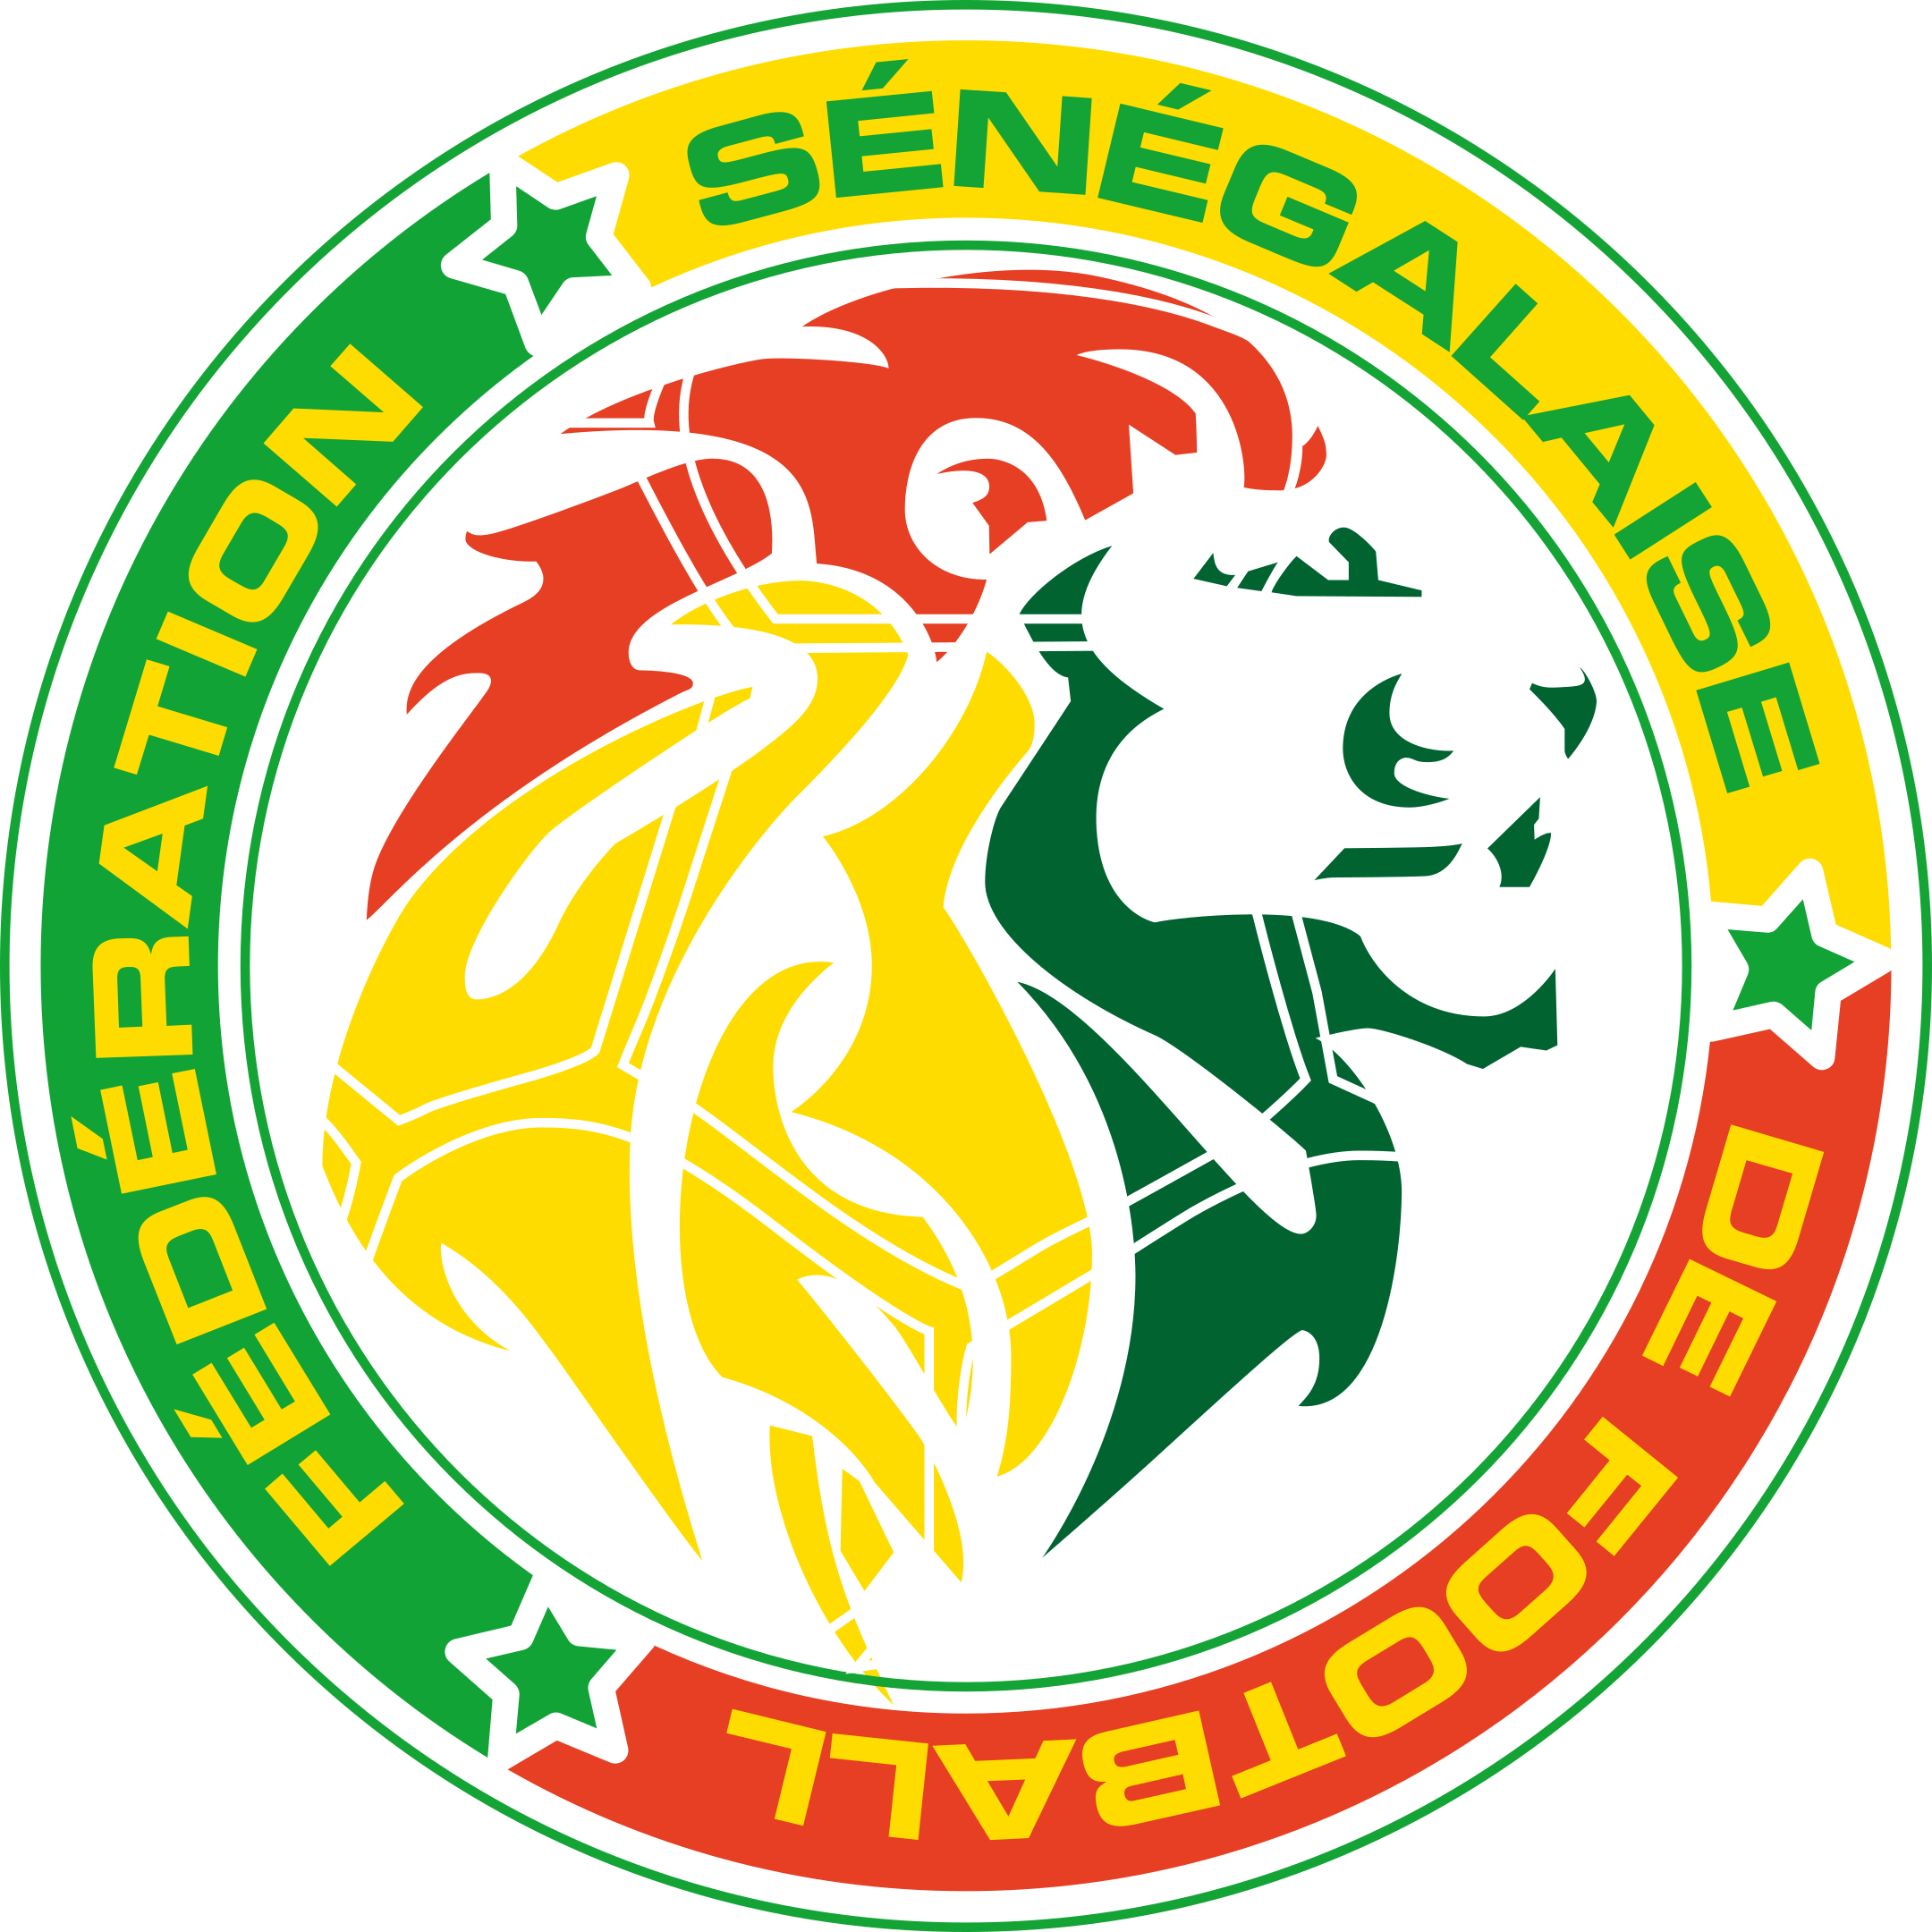 fsf senegal national football team logo 1 - FSF Logo - Équipe du Sénégal de Football Logo